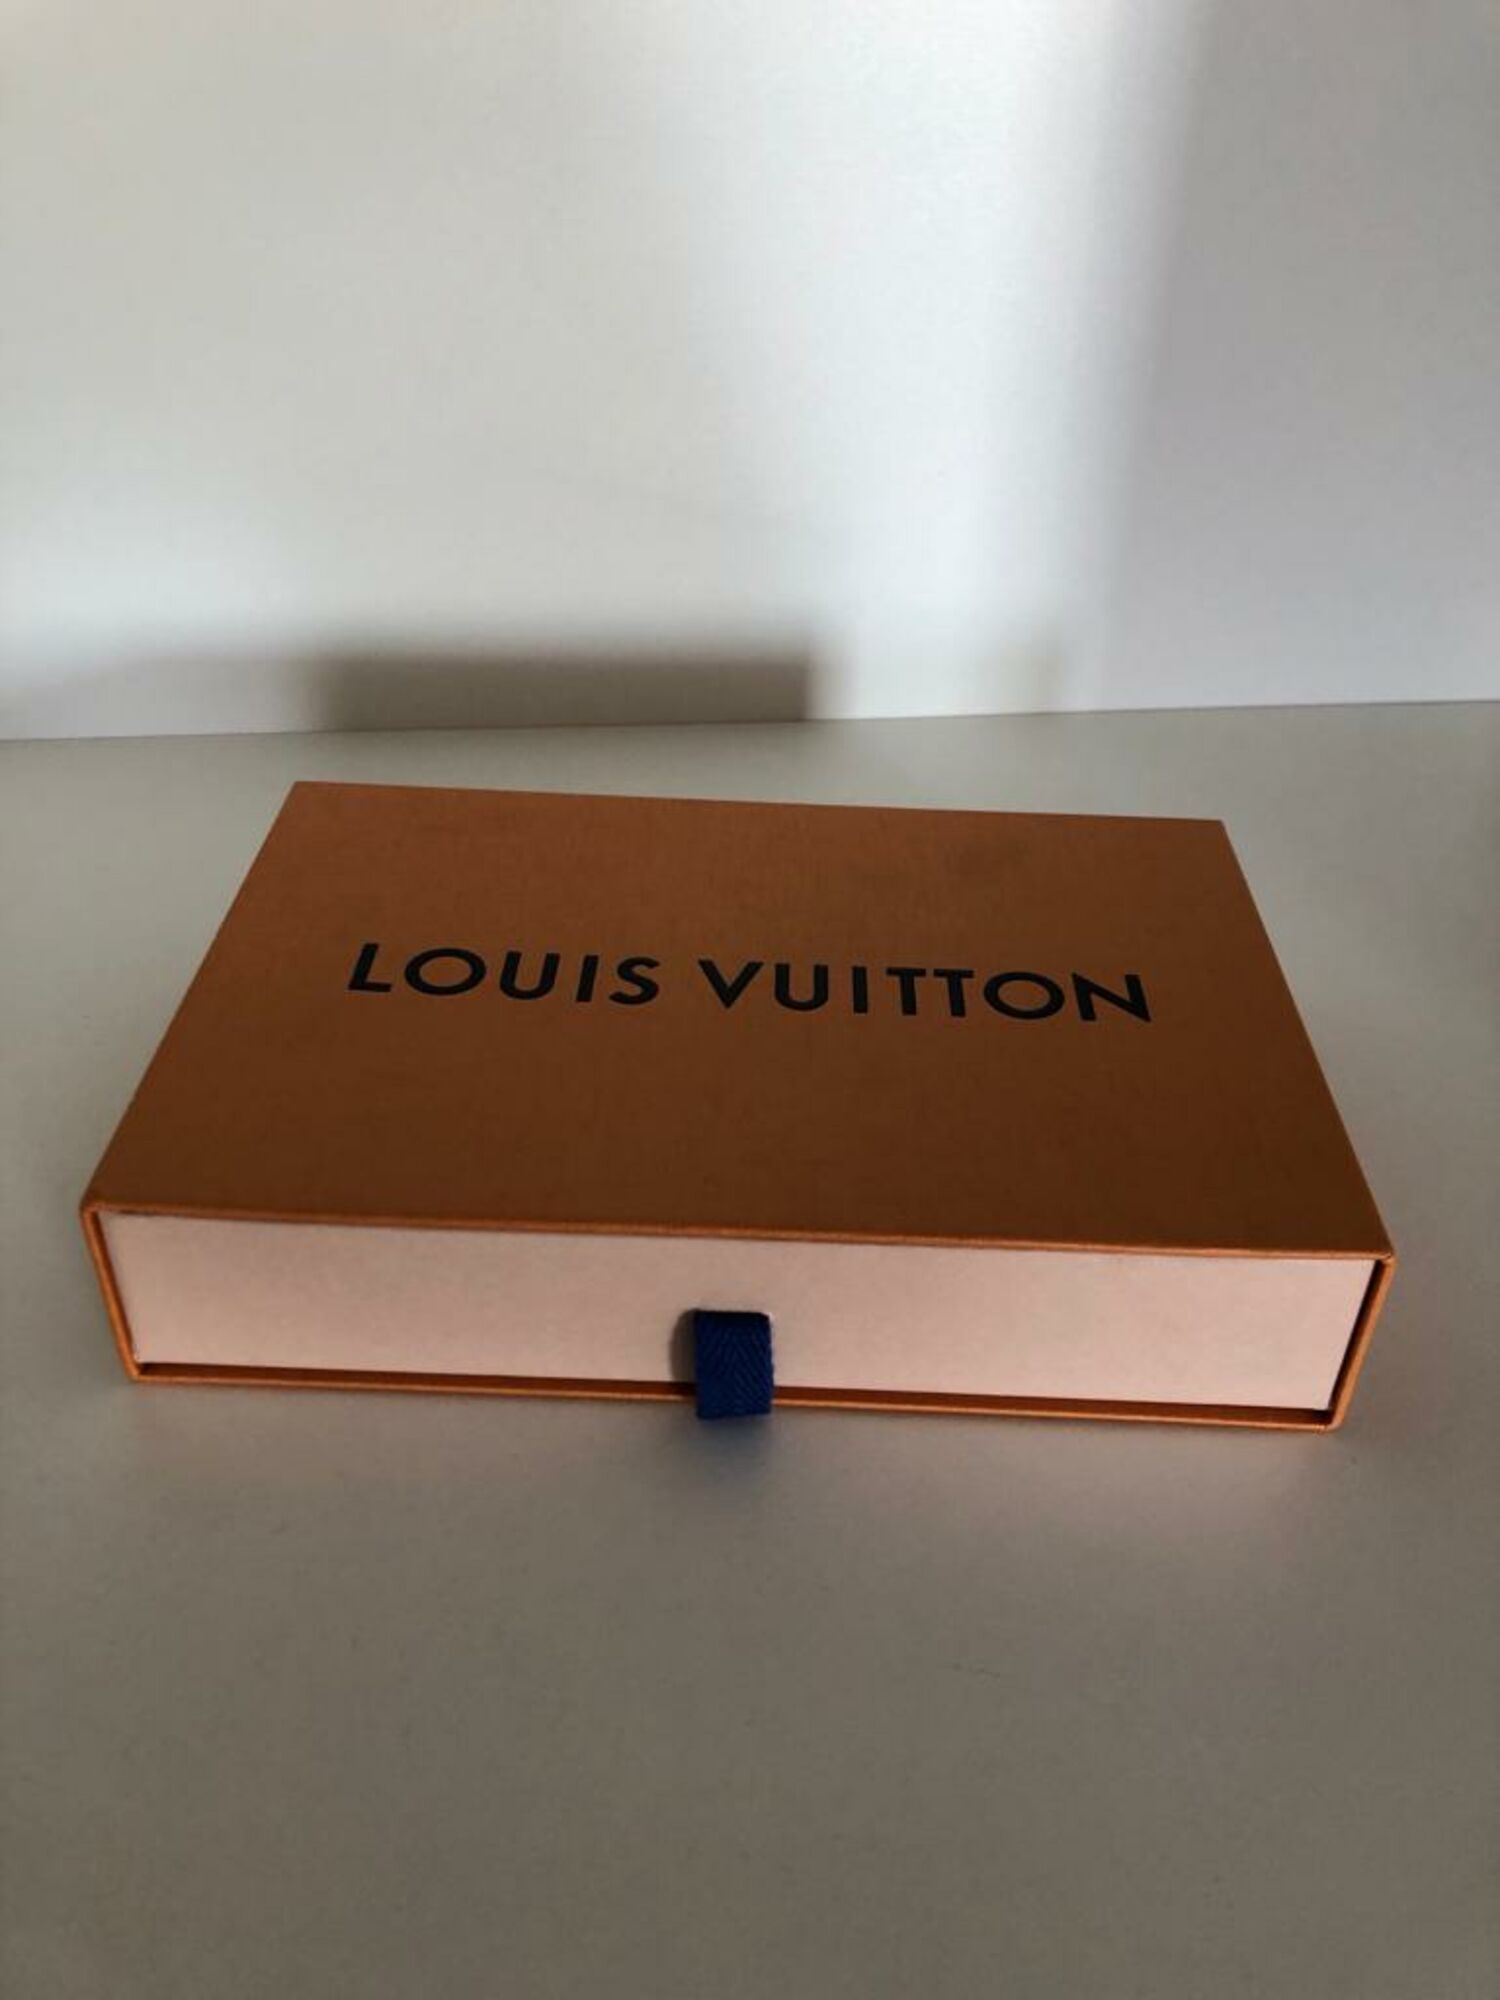 original lv wallet box